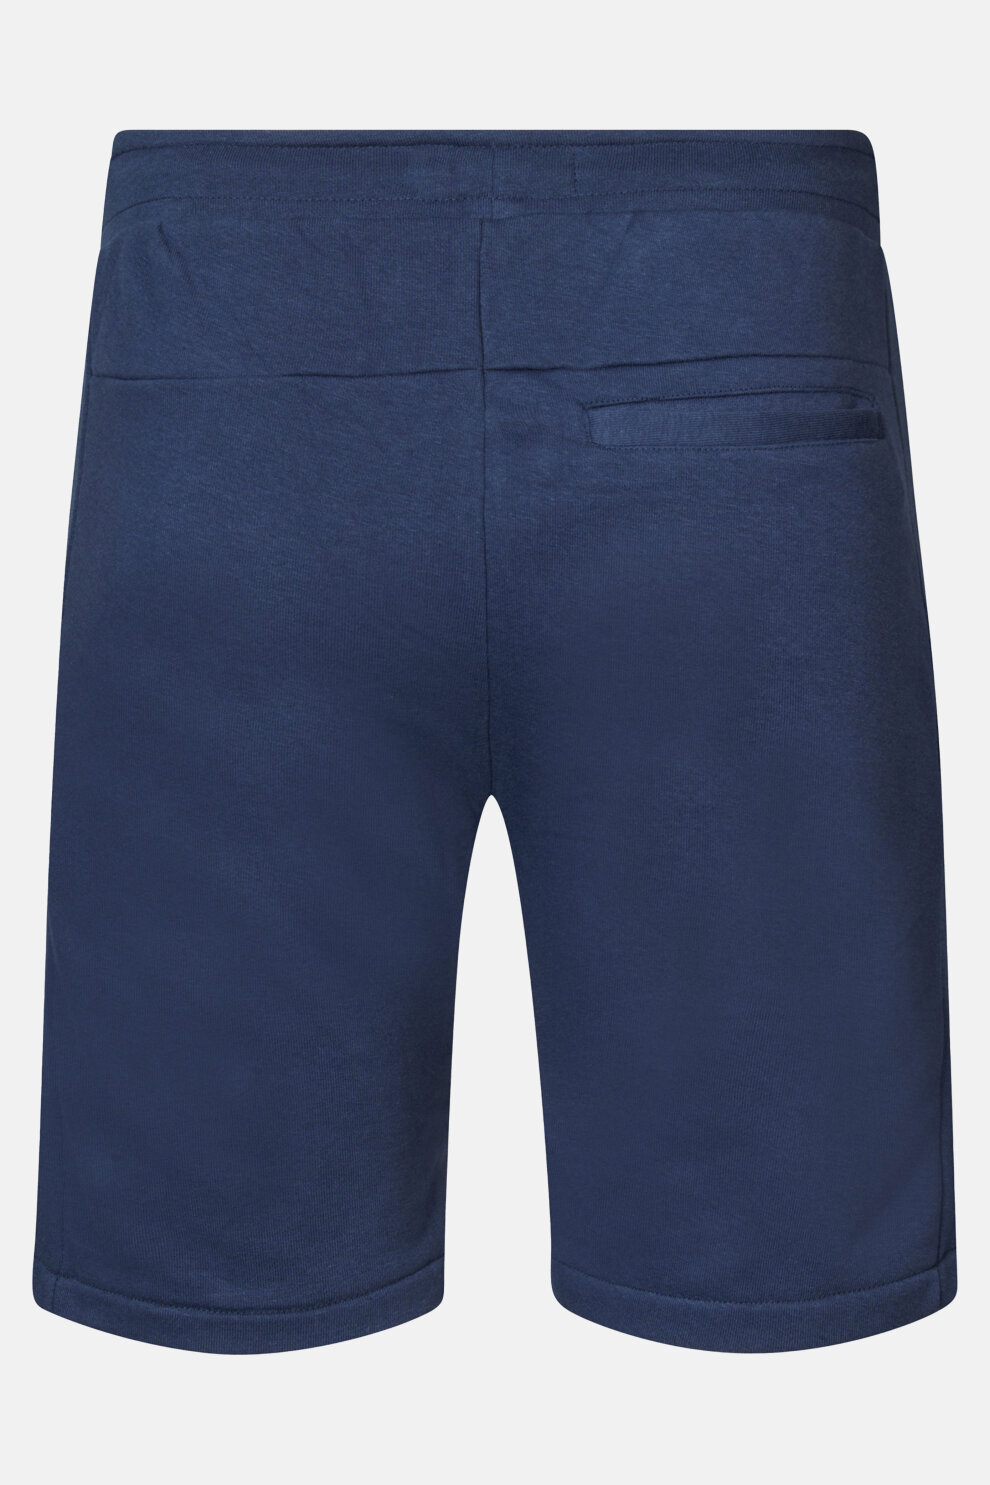 MUŠKARCI - Kratke hlače - Petrol bermude - Plava